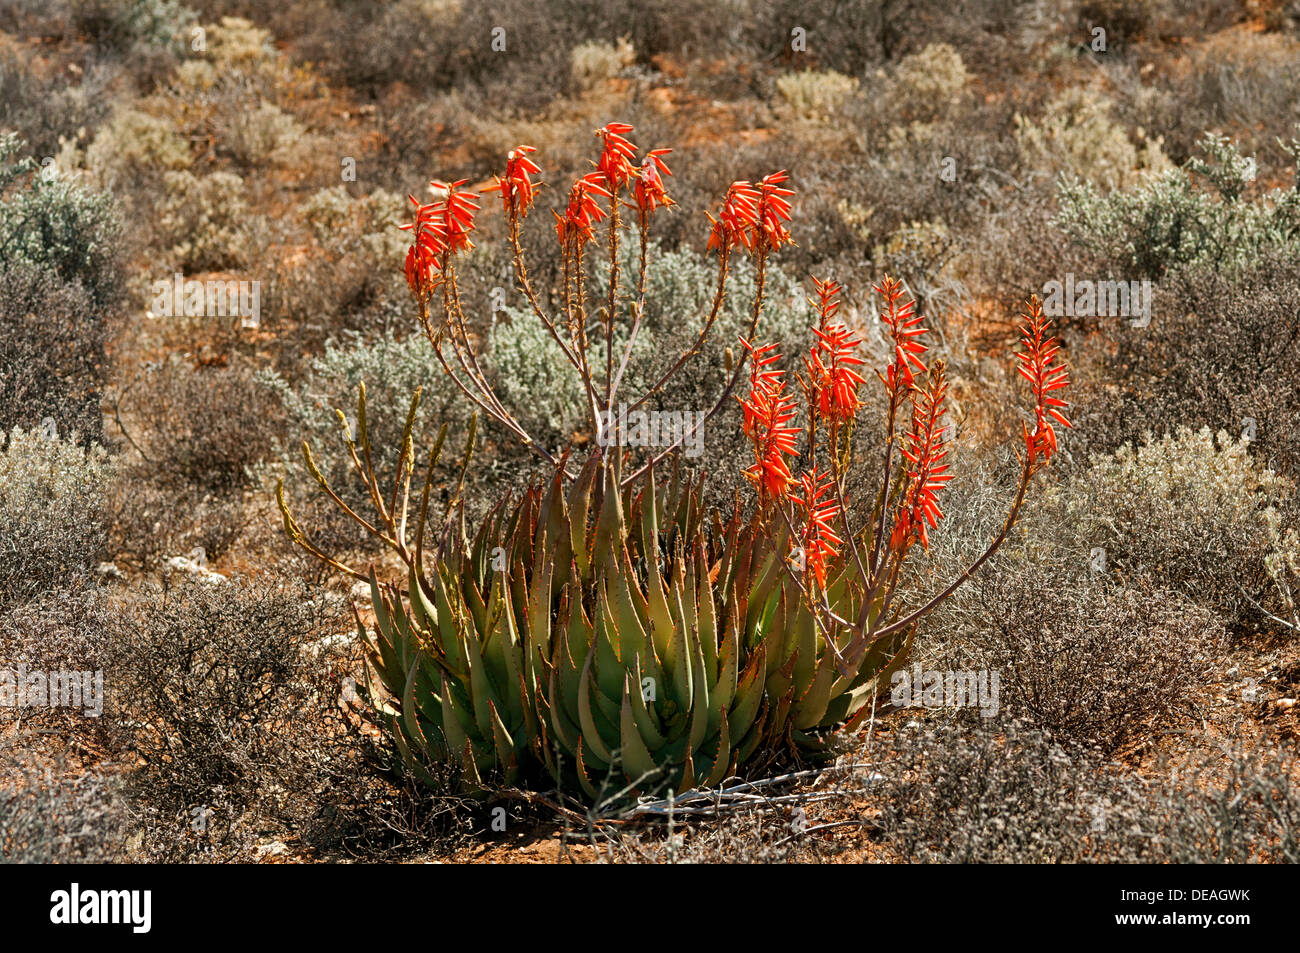 Aloe falcata or Vanrhynsdorp aloe, in its habitat, Knersvlakte, Vanrhynsdorp, South Africa Stock Photo